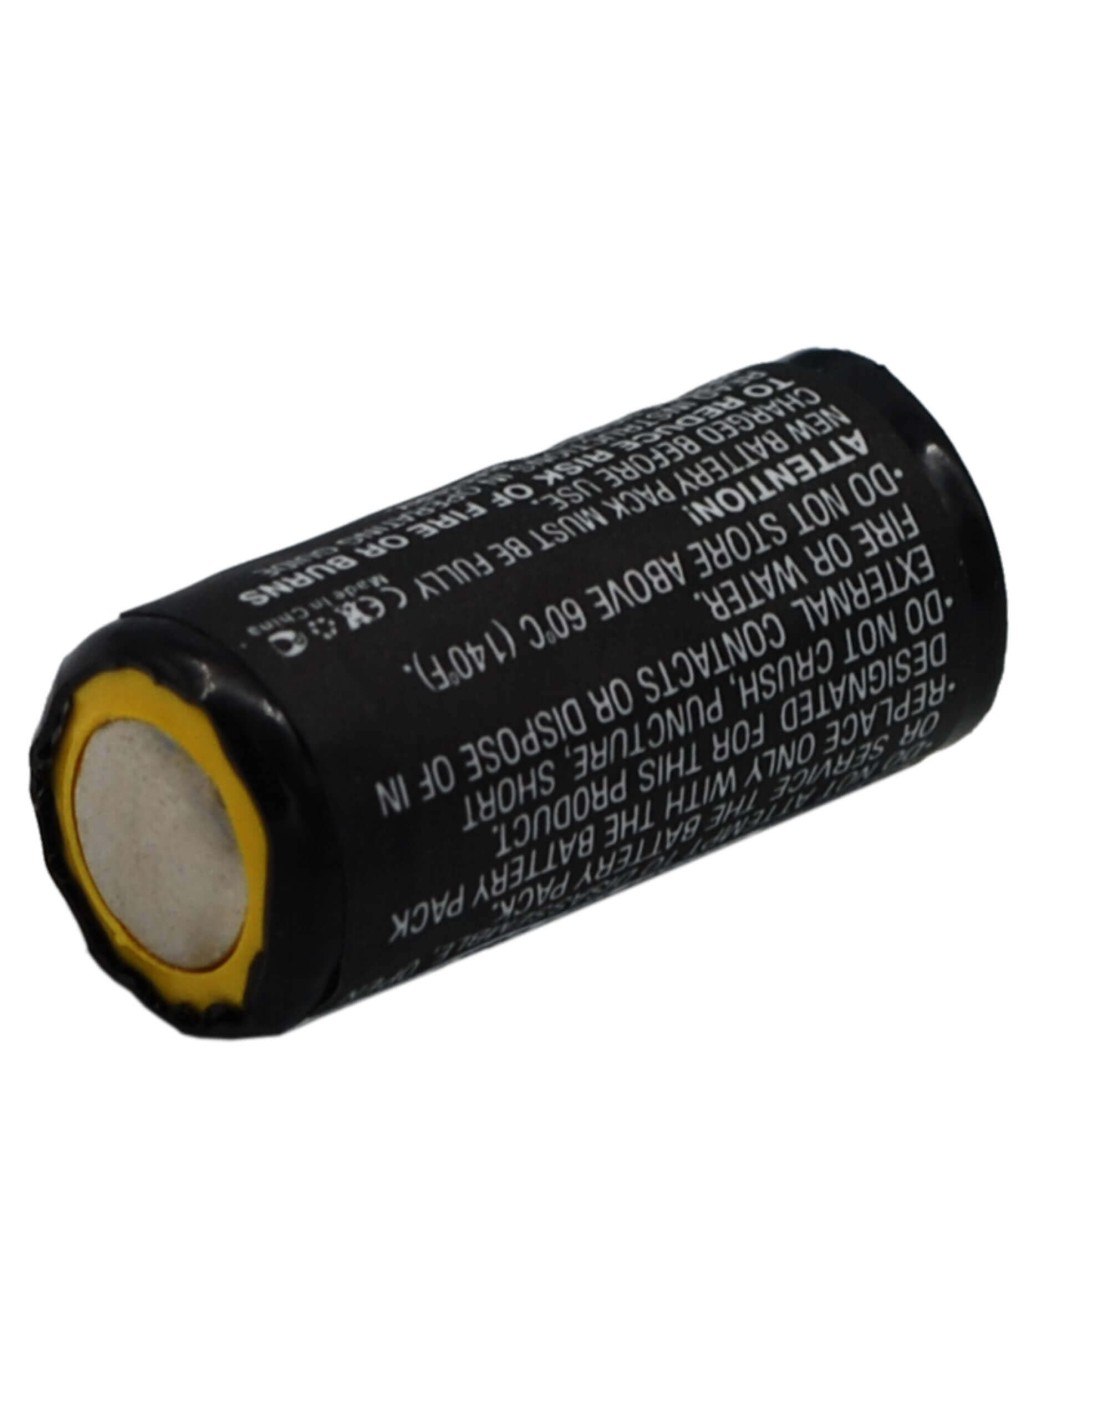 Battery for Petstop Ot200 Dog Fencing Collar, Pst06 7.5V, 160mAh - 1.20Wh